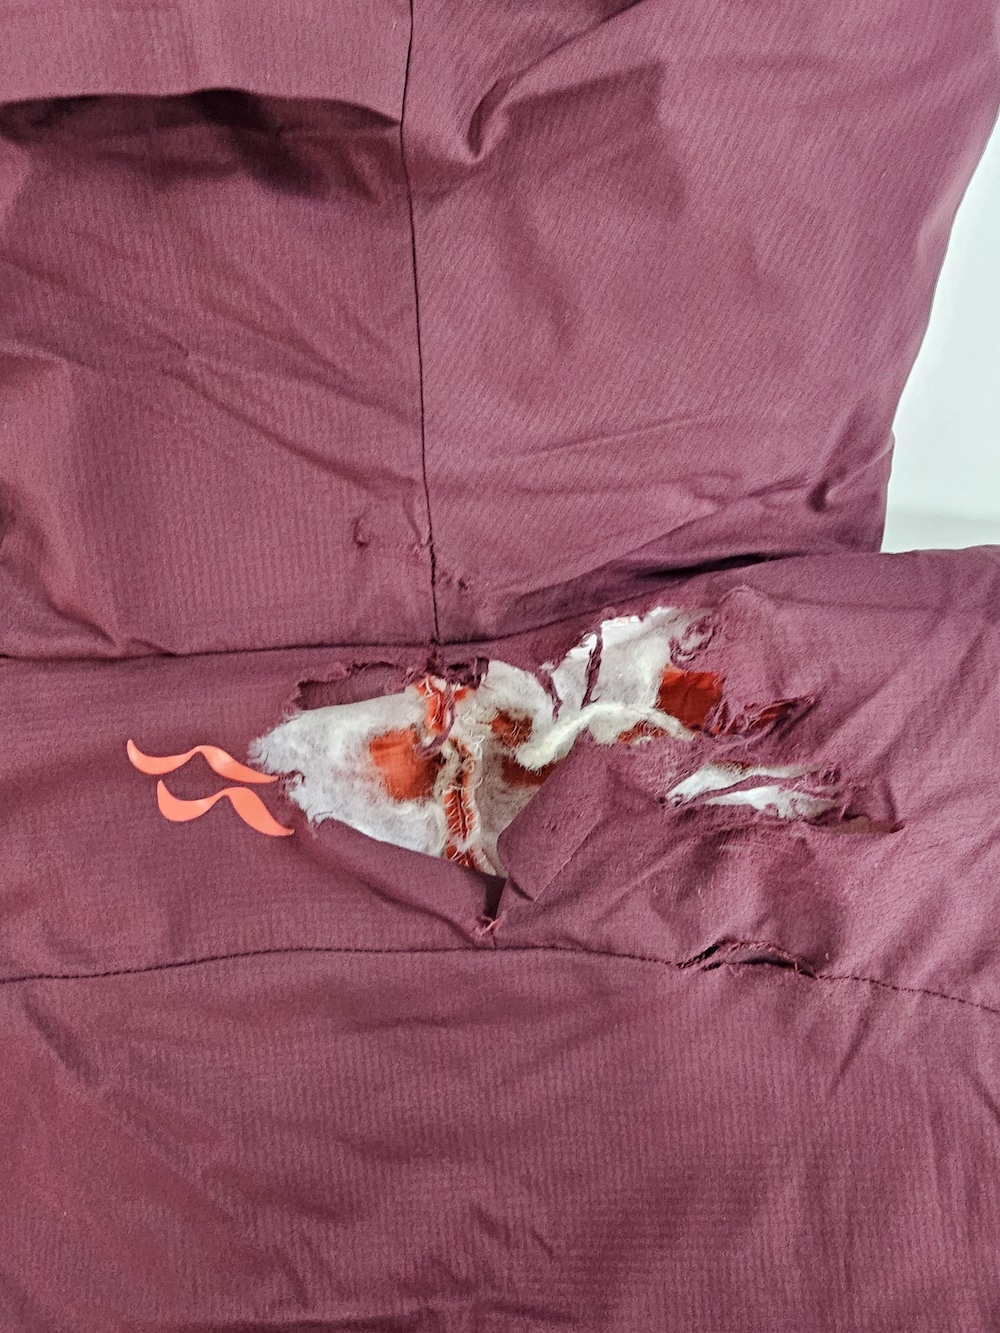 torn purple jacket damage